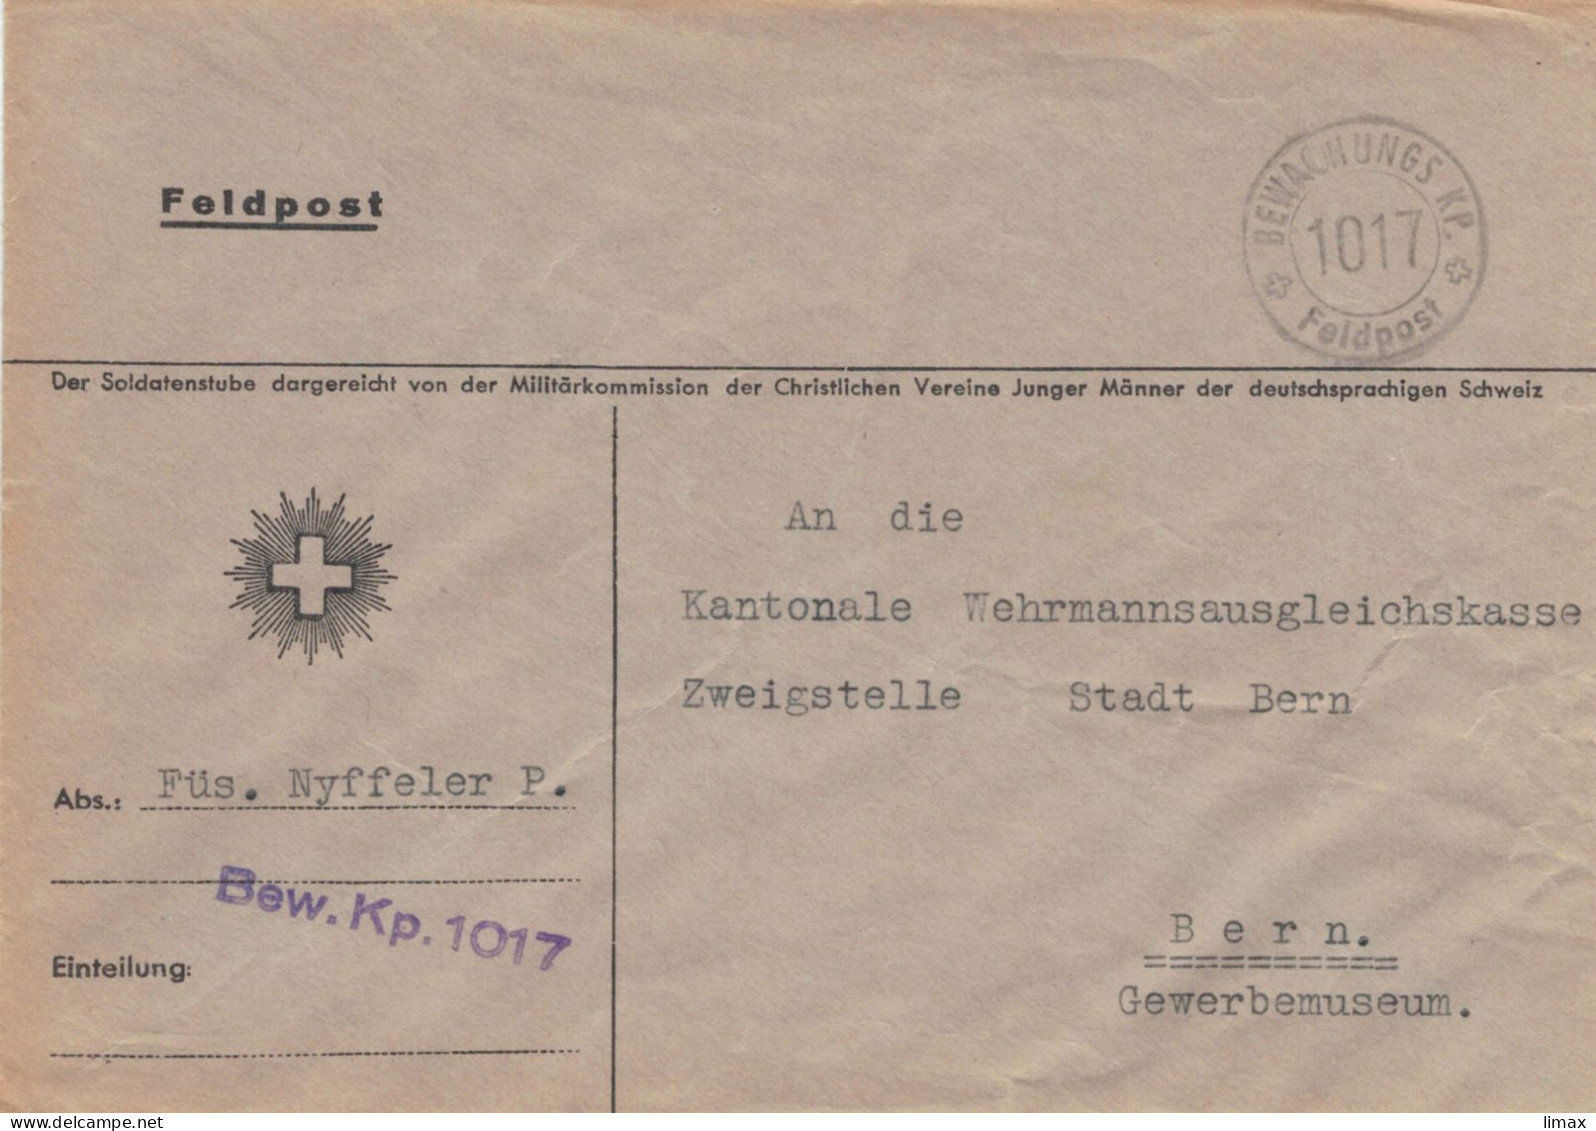 Feldpost Füsilier Nyffeler P. Bewachungskompanie 1017 > Kantonale Wehrmannsausgleichkasse Bern - Oficial